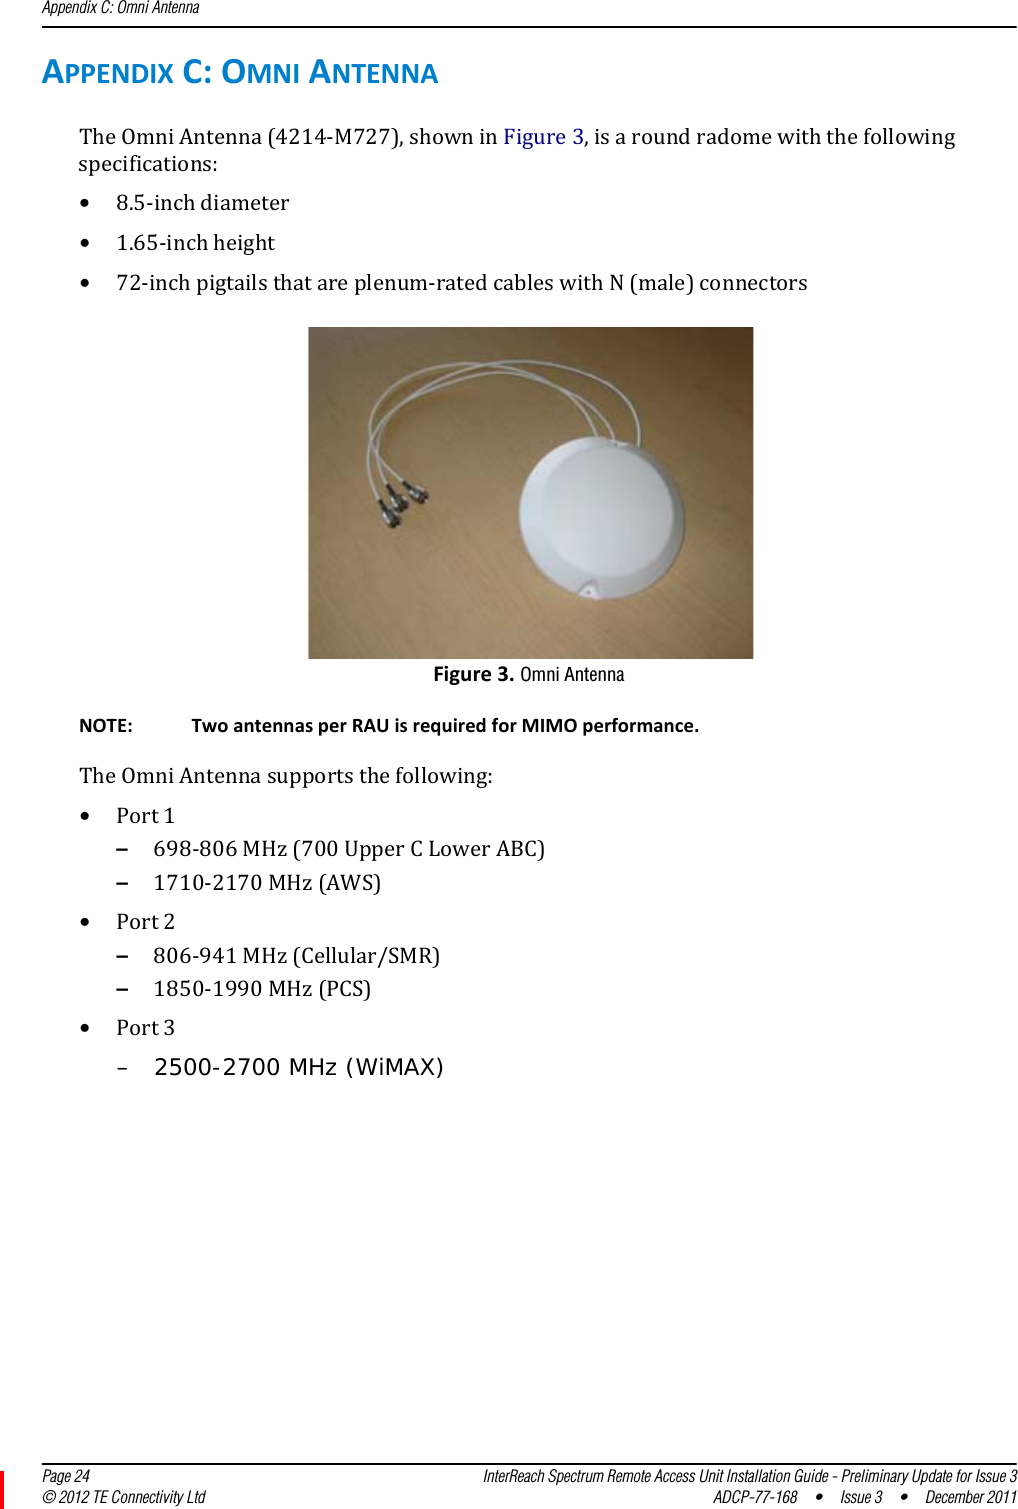 Page 26 of ADC Telecommunications S2197-011 Spectrum 700 Path 2/HP-AWS Path 2 SRAU User Manual 